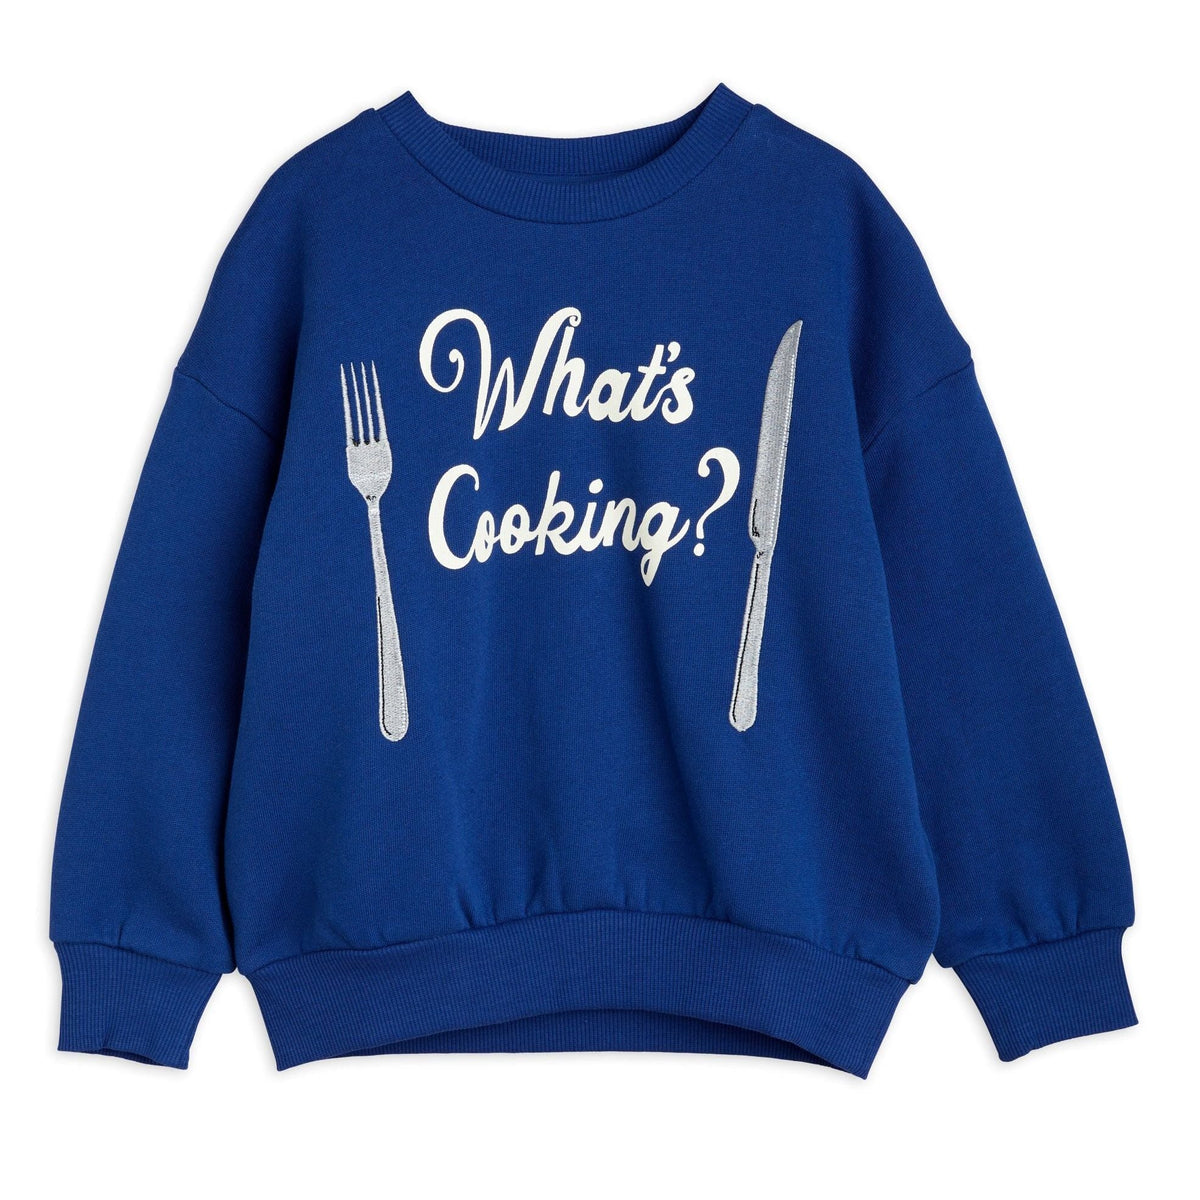 Whats Cooking Emb Sweatshirt